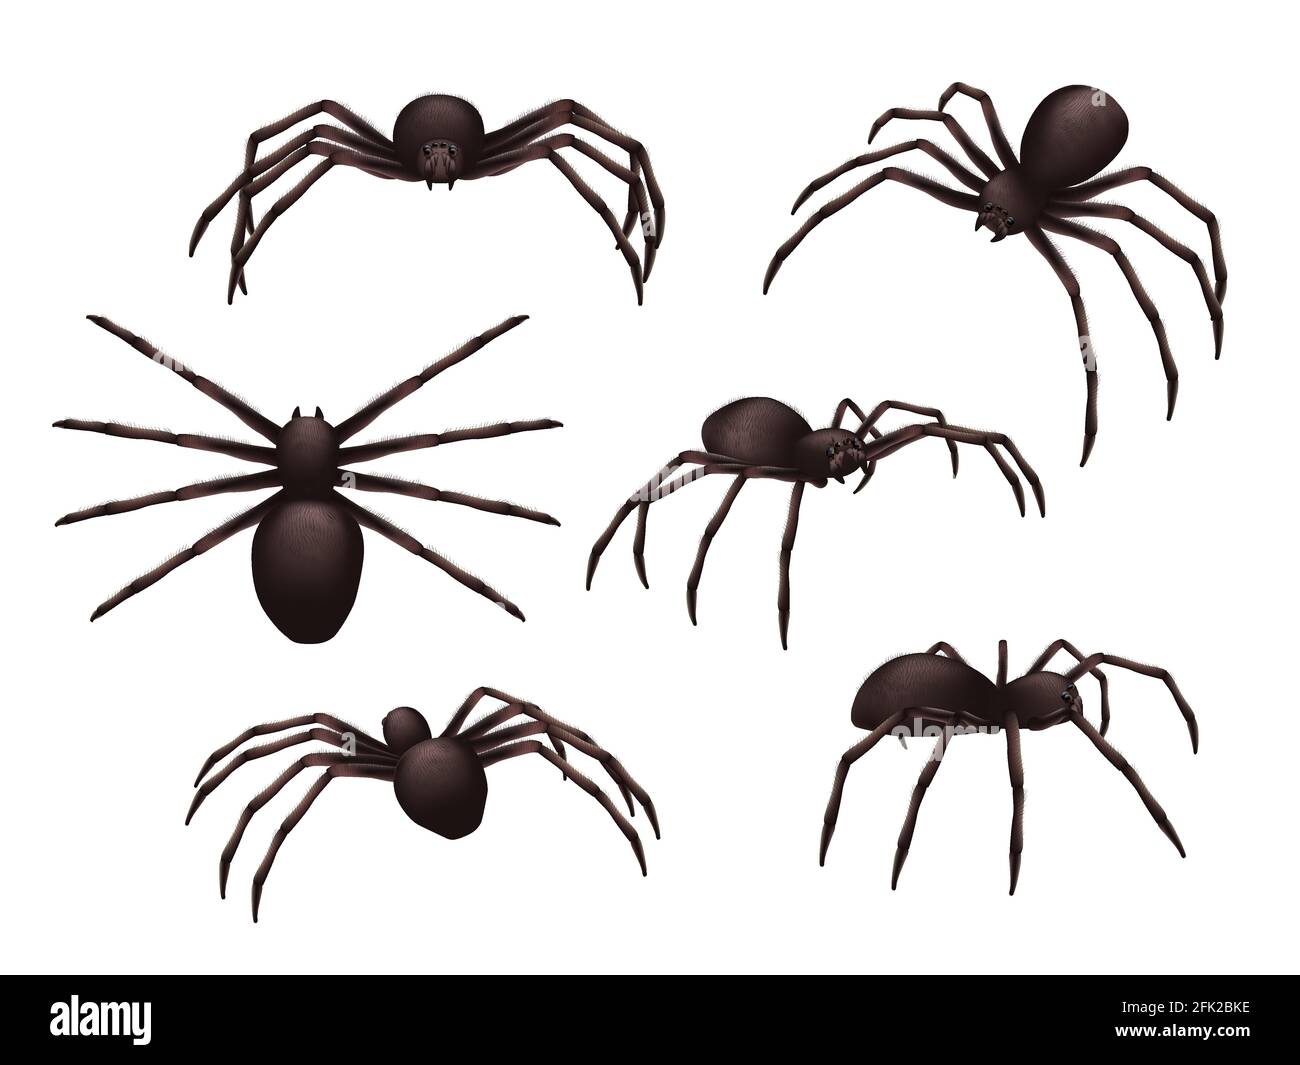 Insekten realistisch. Spider Danger Gift Horror giftige schwarze Symbole Vektor-Set Stock Vektor